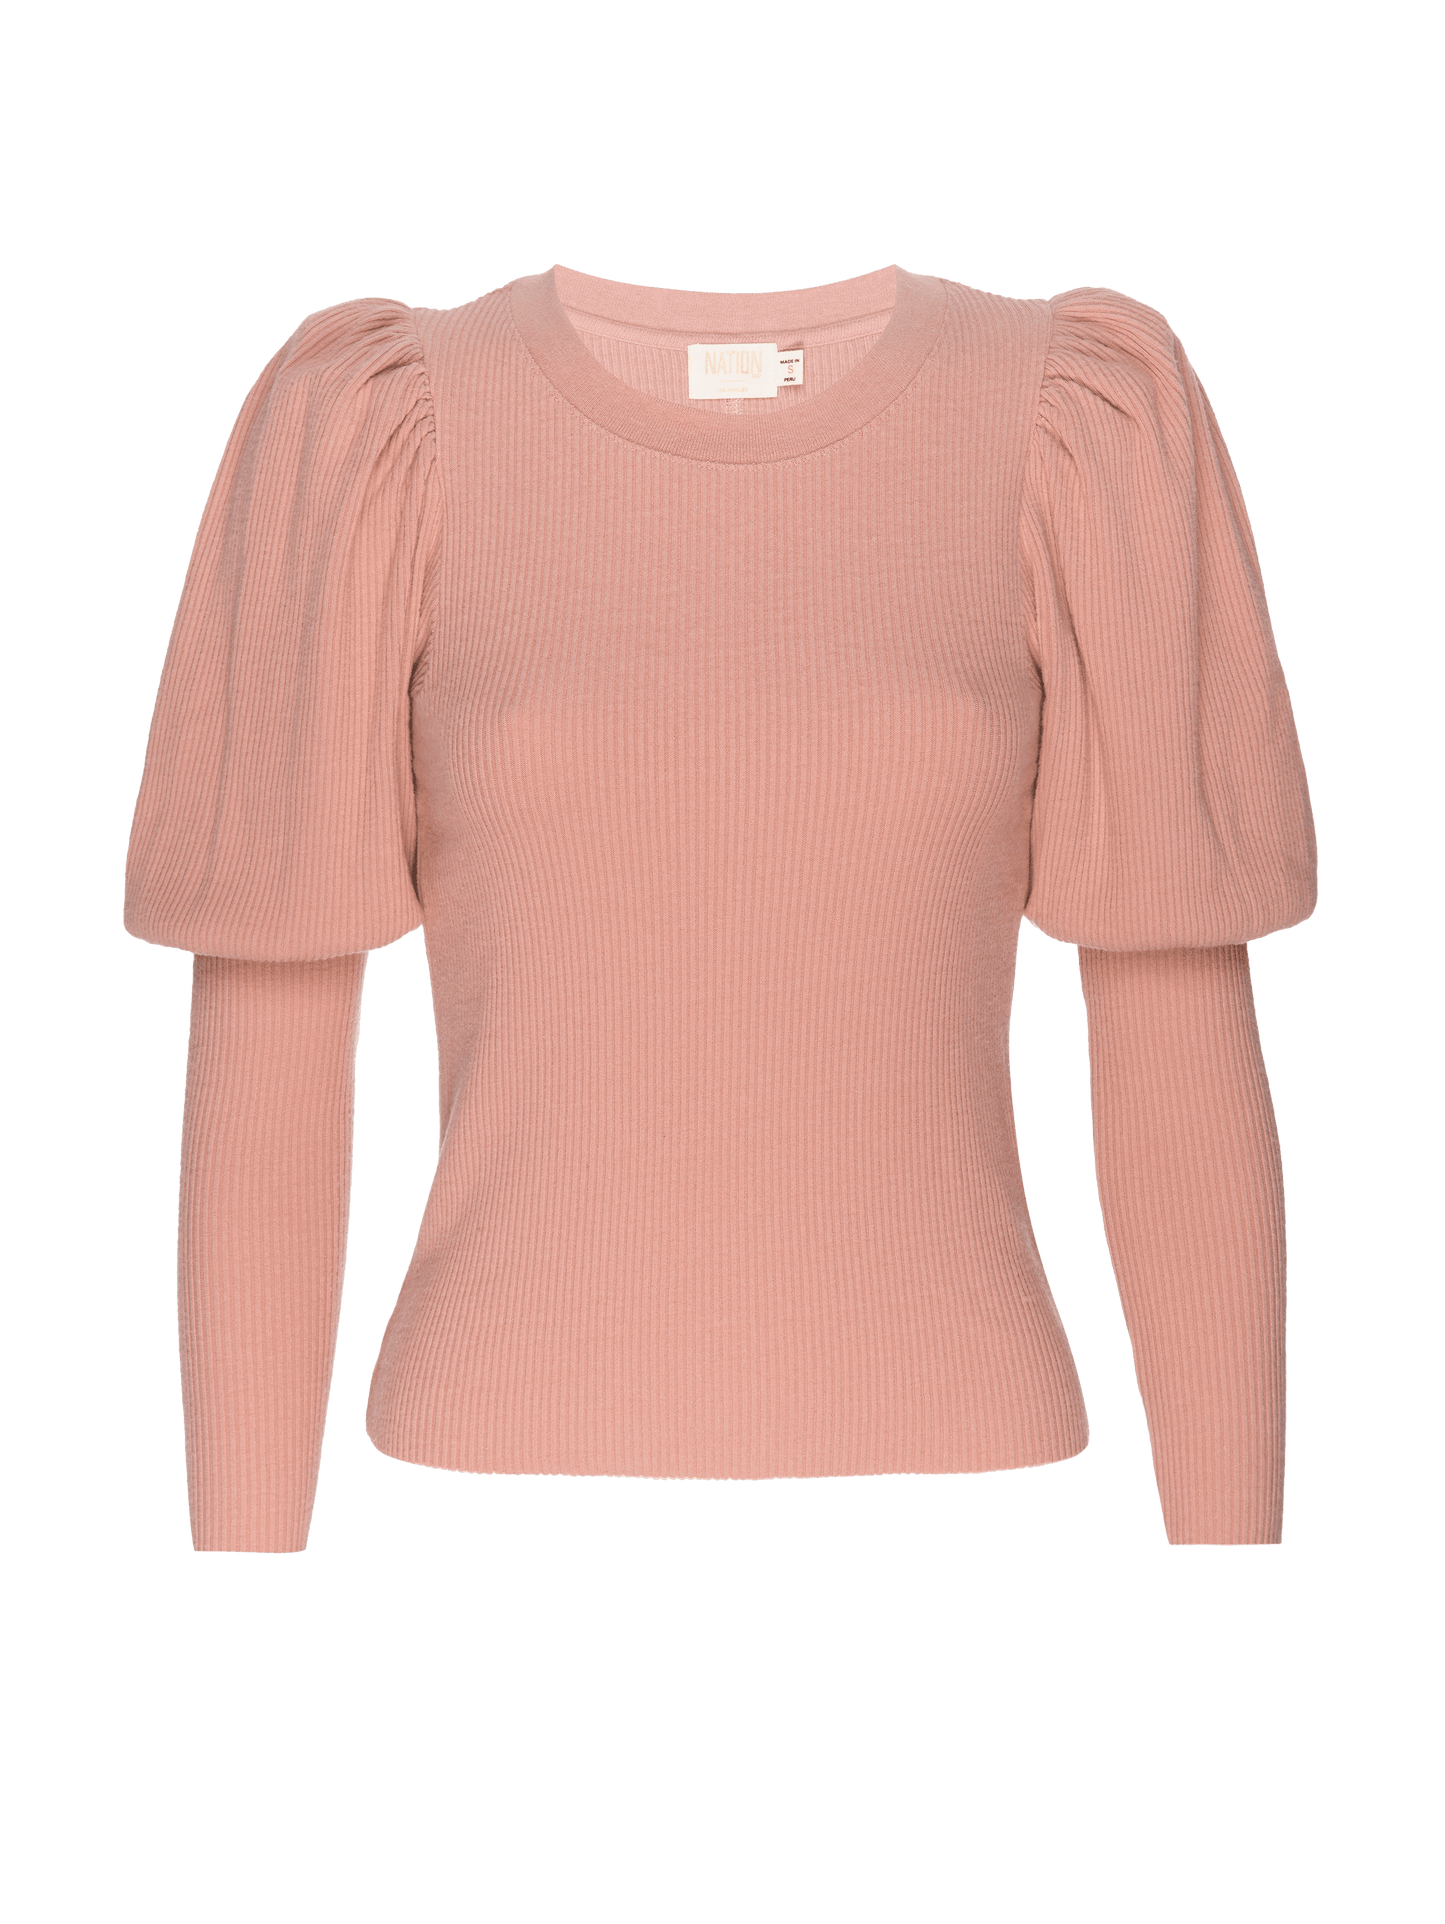 Nation Zia Sweater Tee